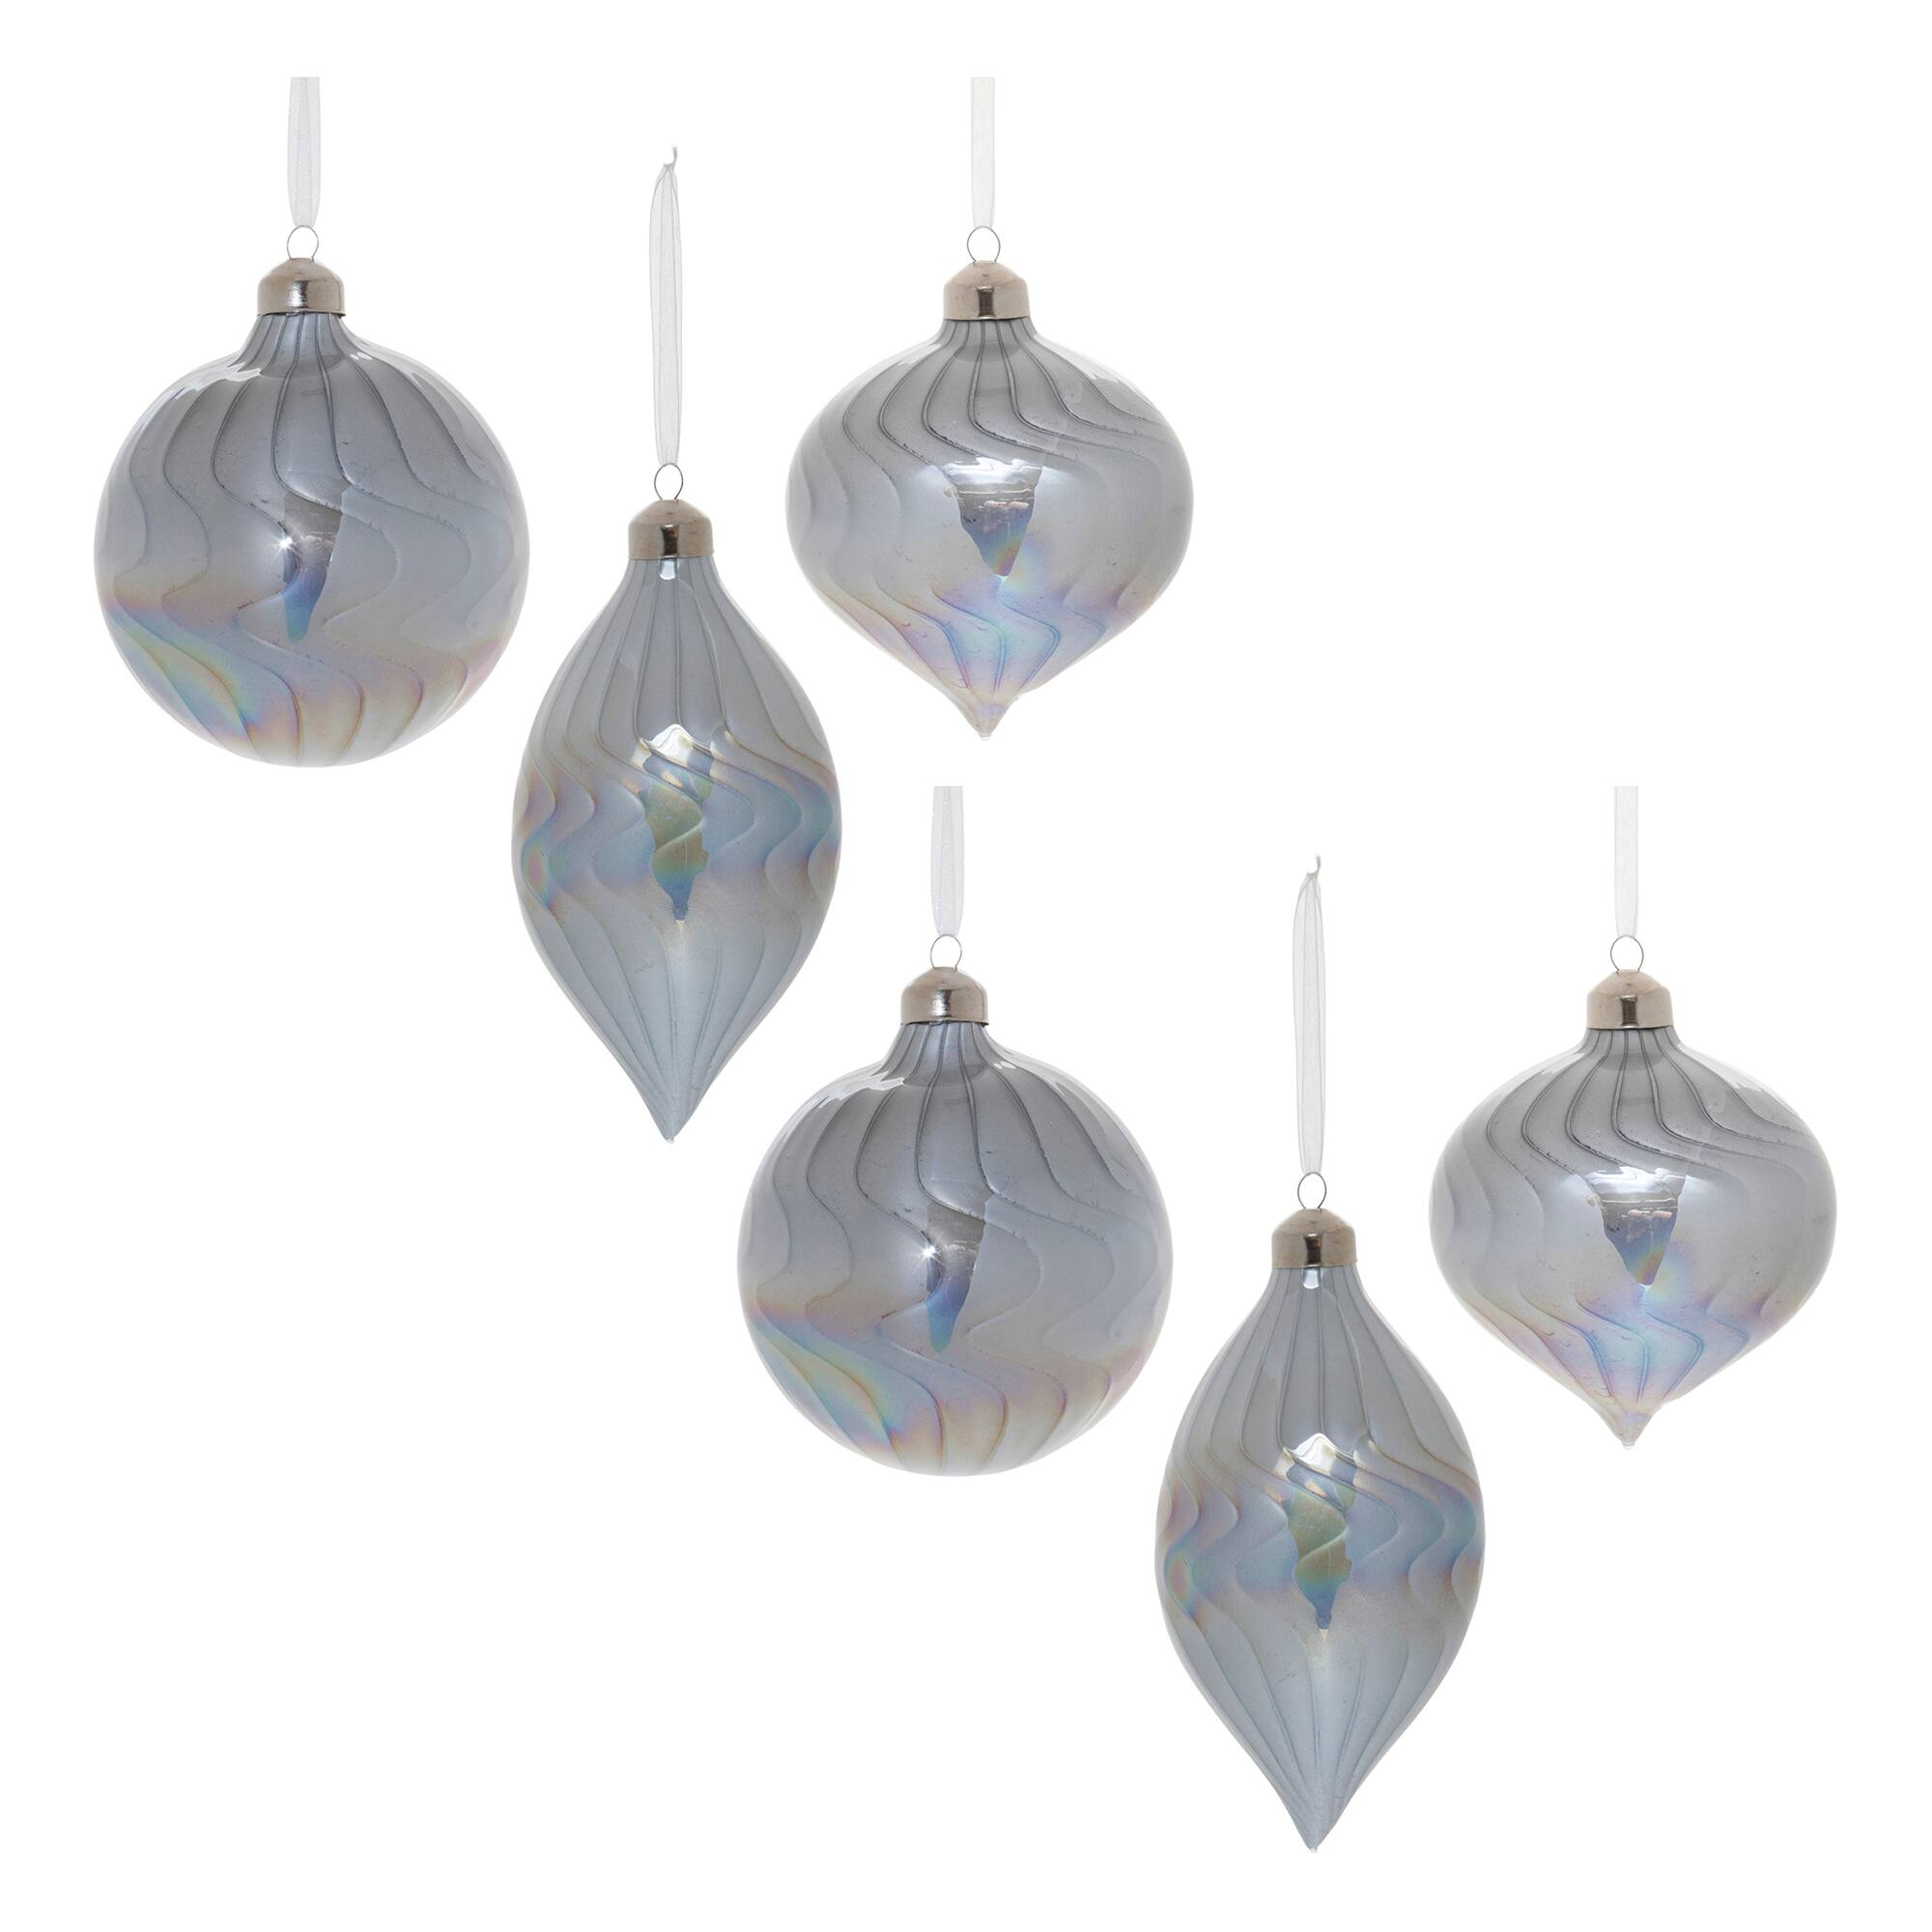 Wavy Iridescent Gray Glass Ornament Set